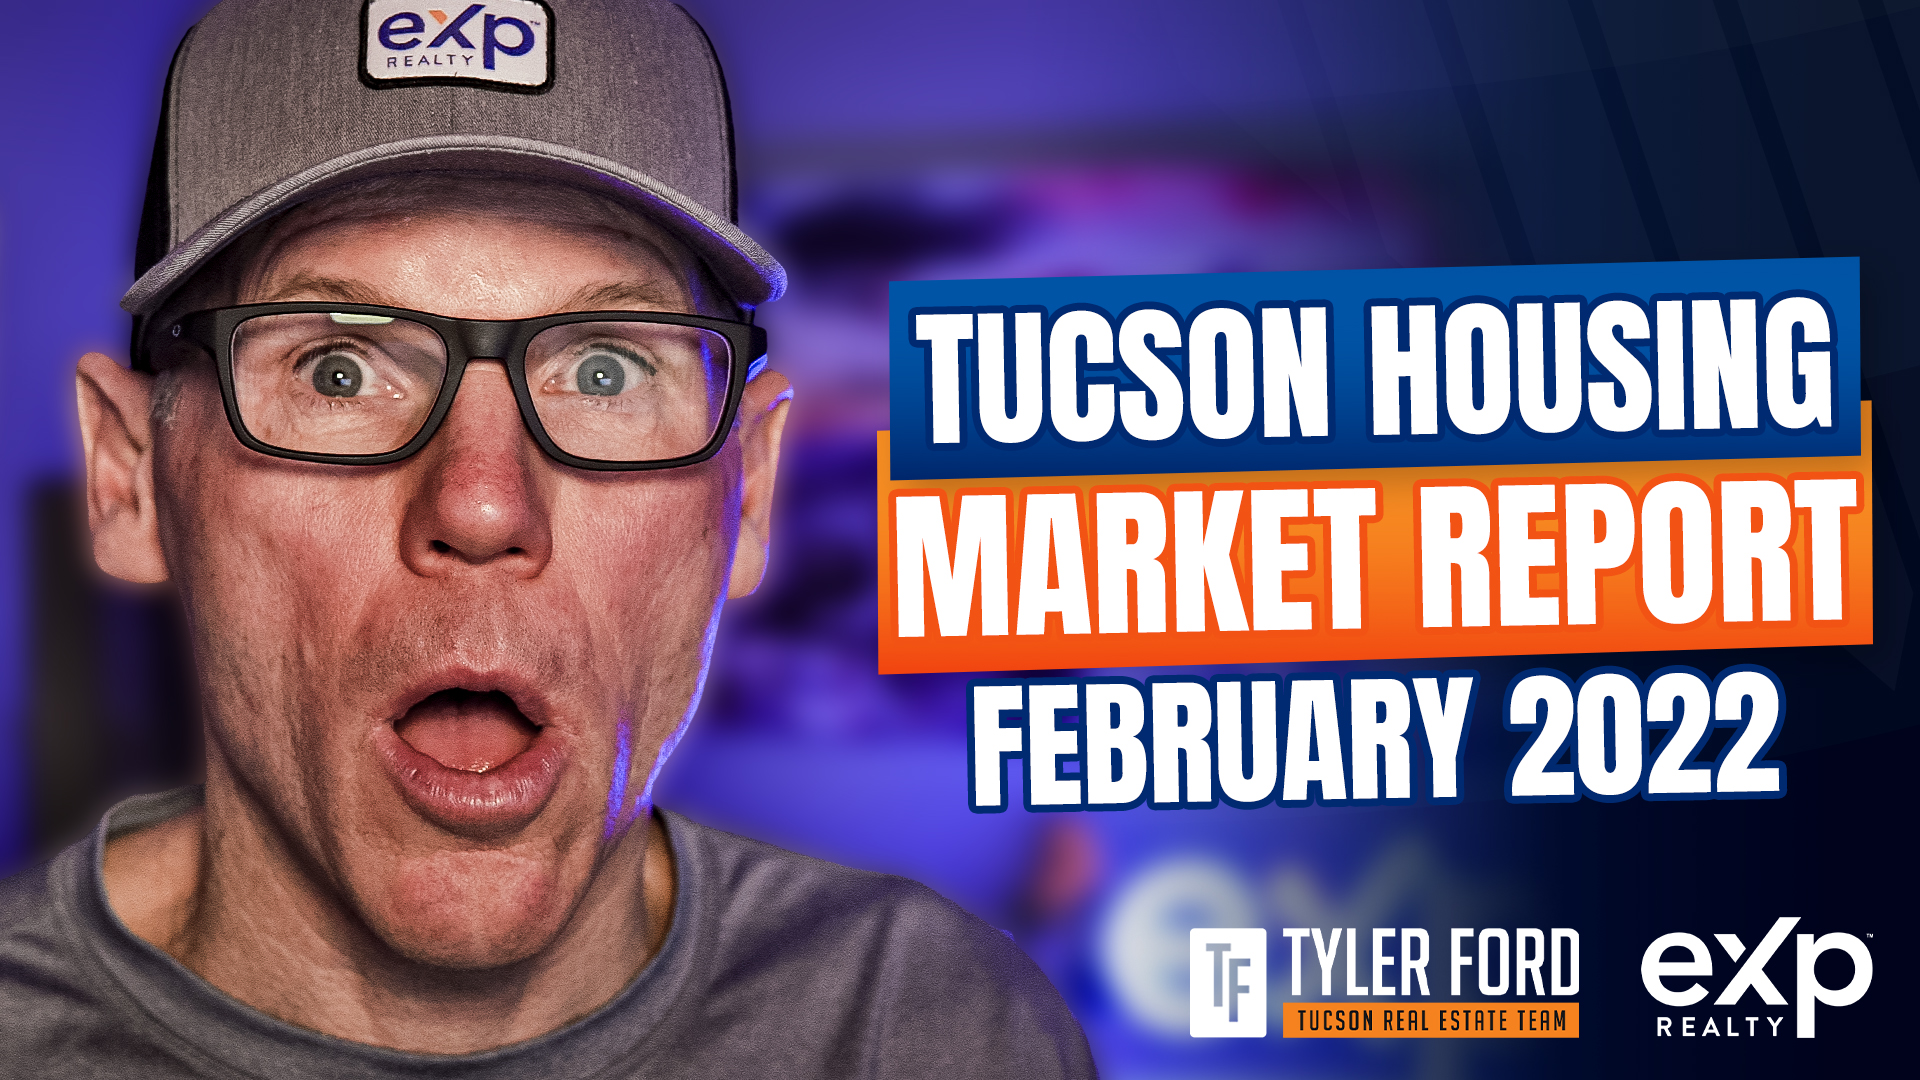 Tucson Arizona Residential Housing Market Report For February 2022